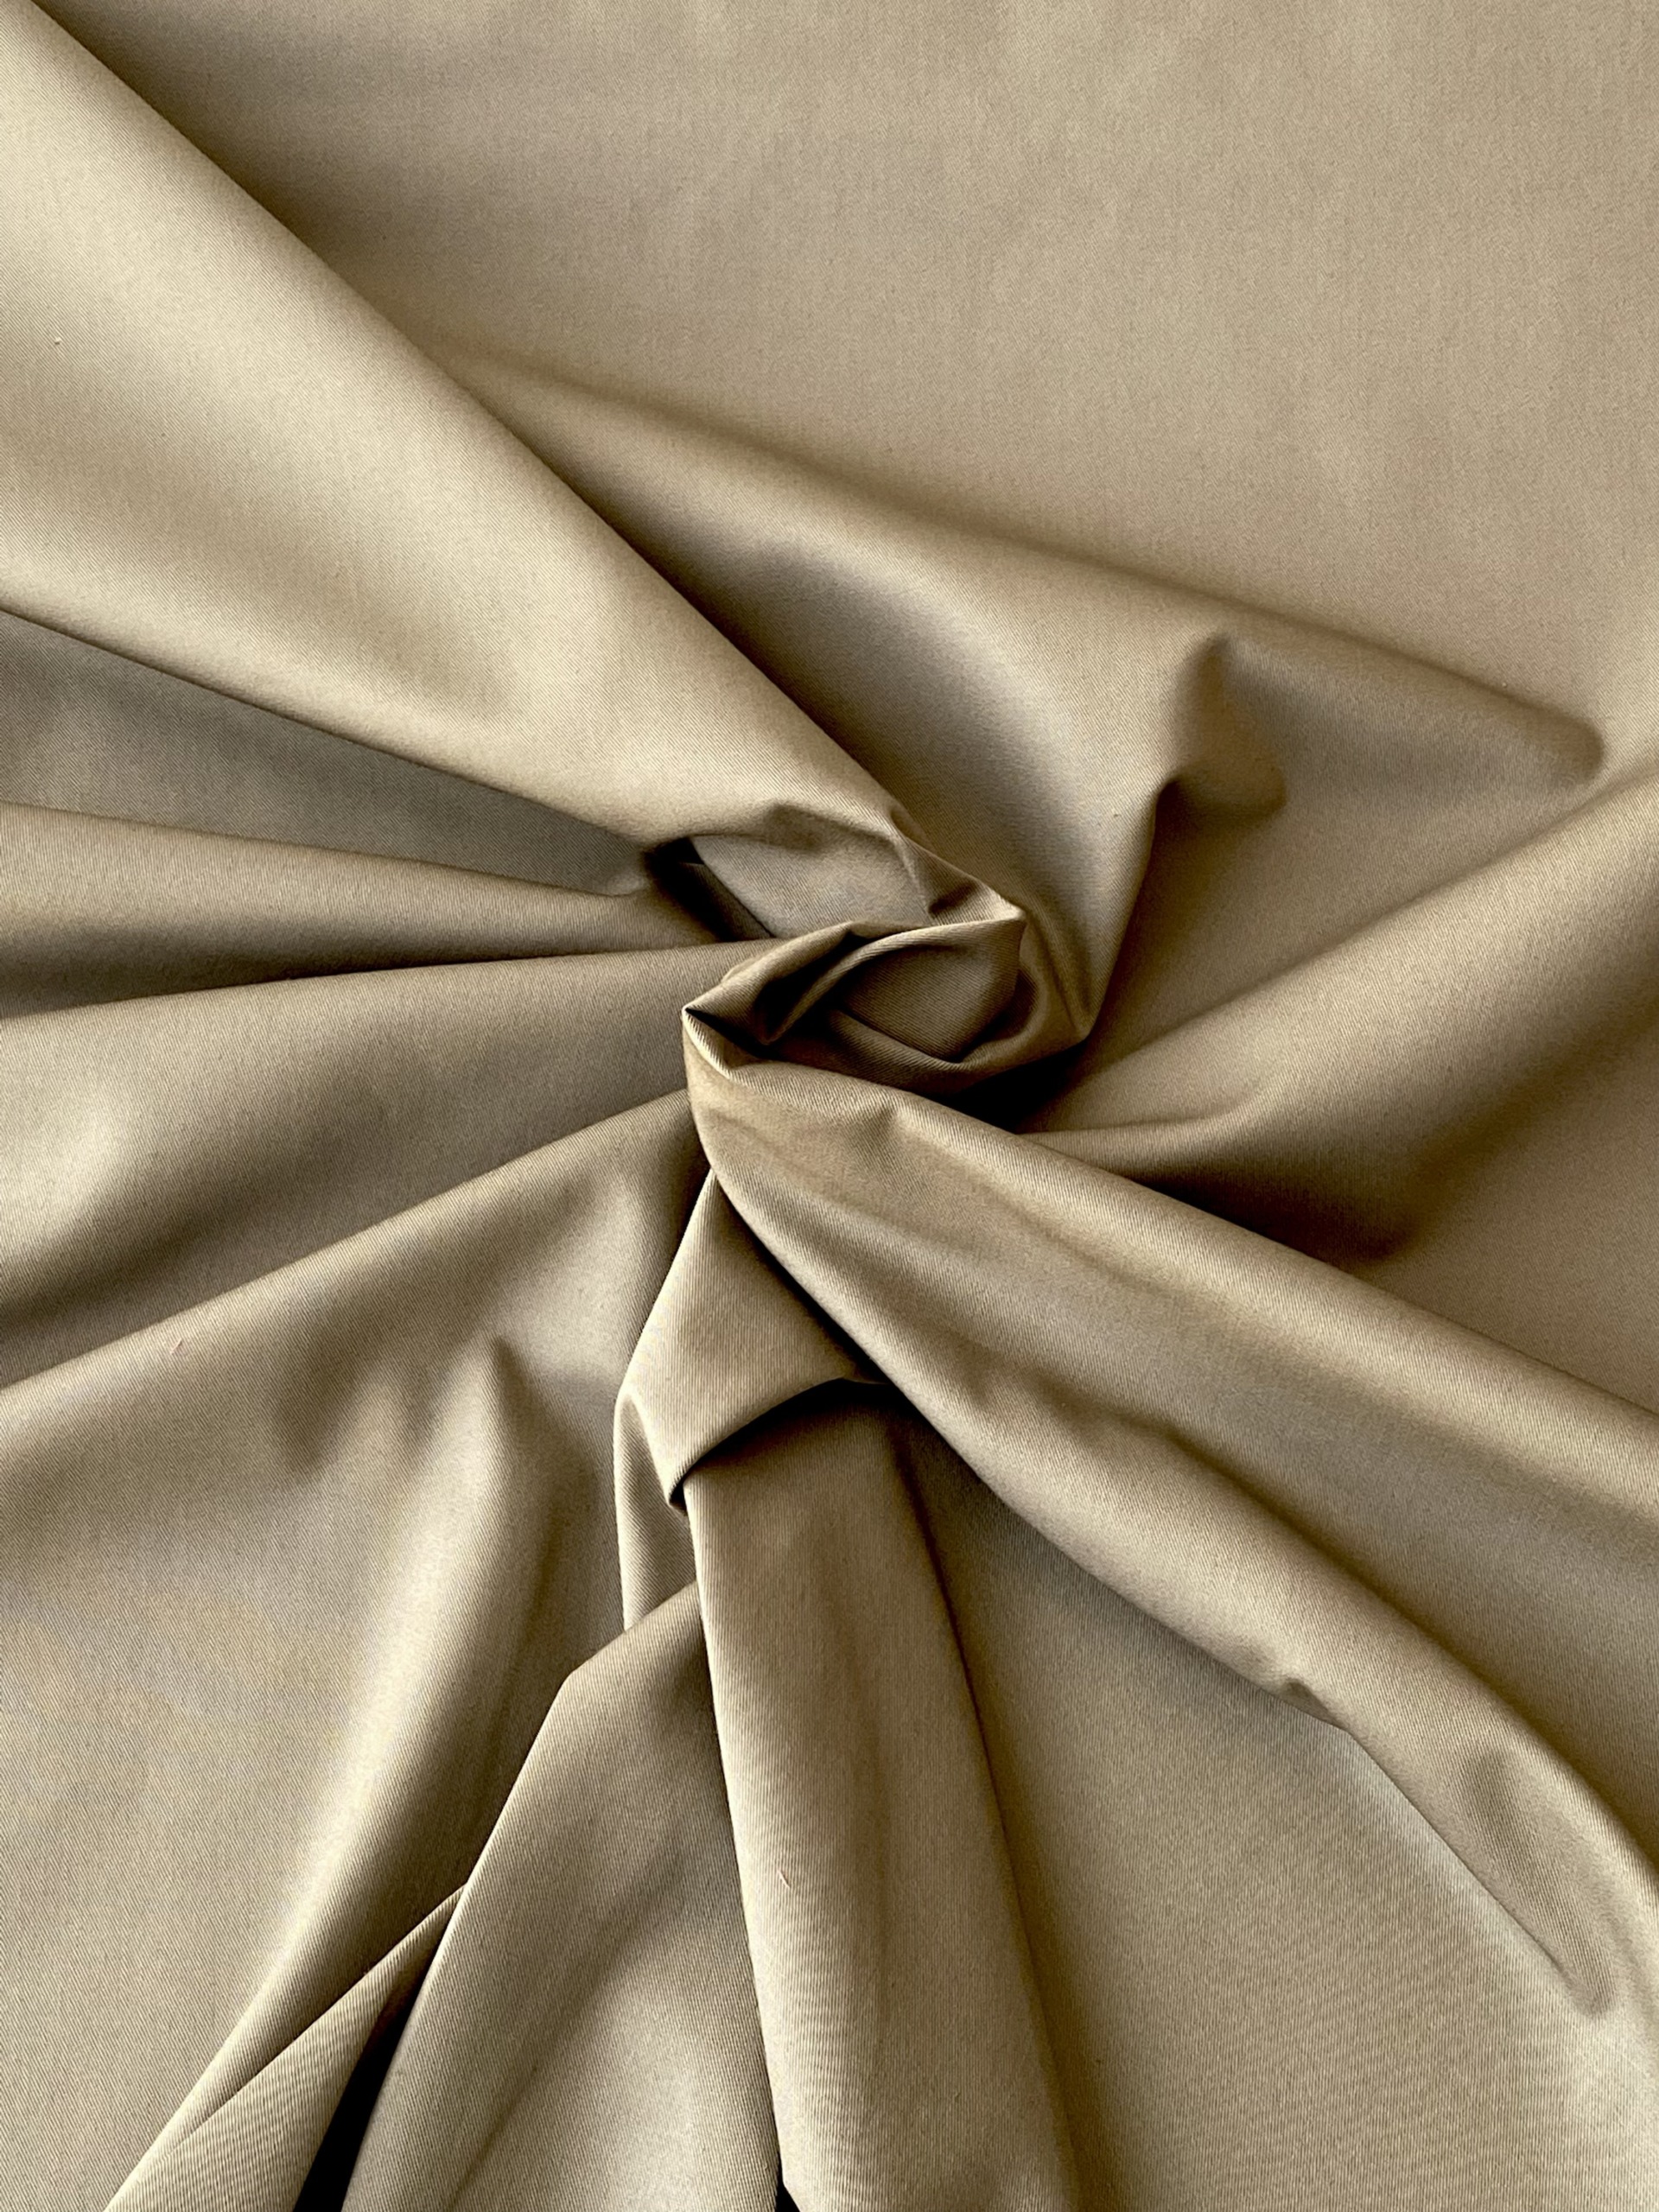 Khaki cotton gabardine fabric men's summer trouser fabric 150 cm wide